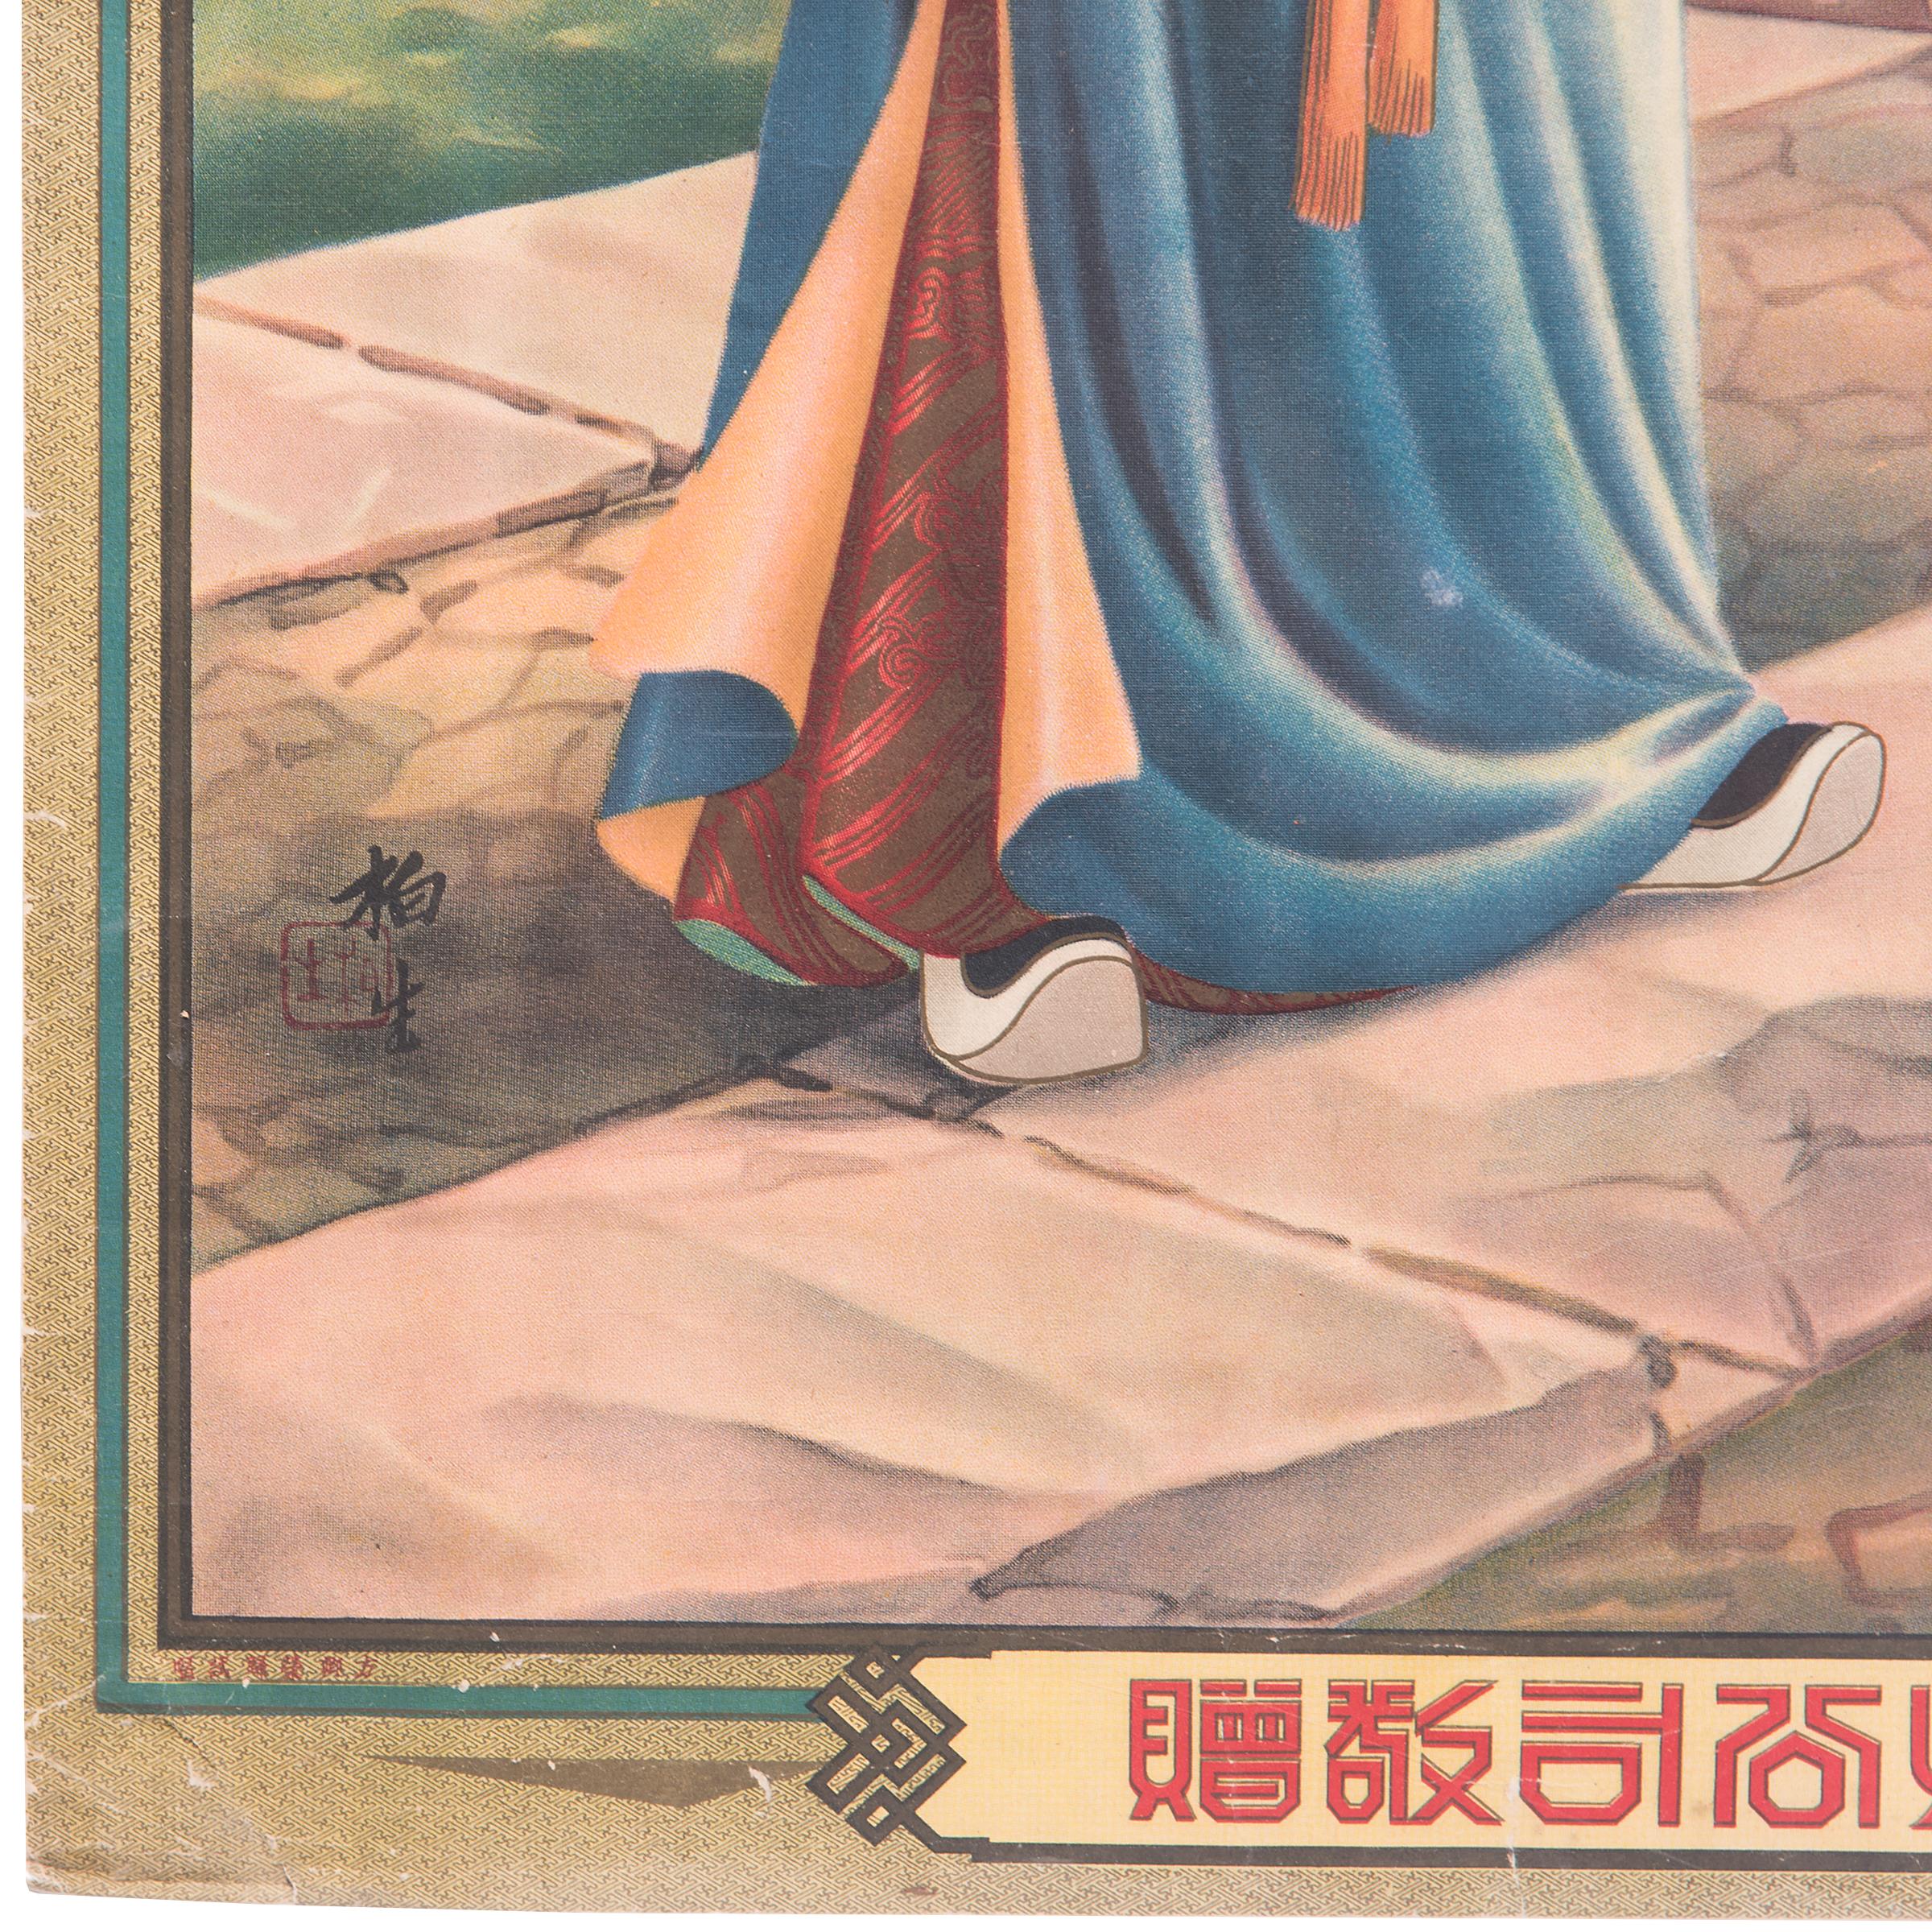 Art Deco Vintage Chinese Cigarette Advertisement Poster